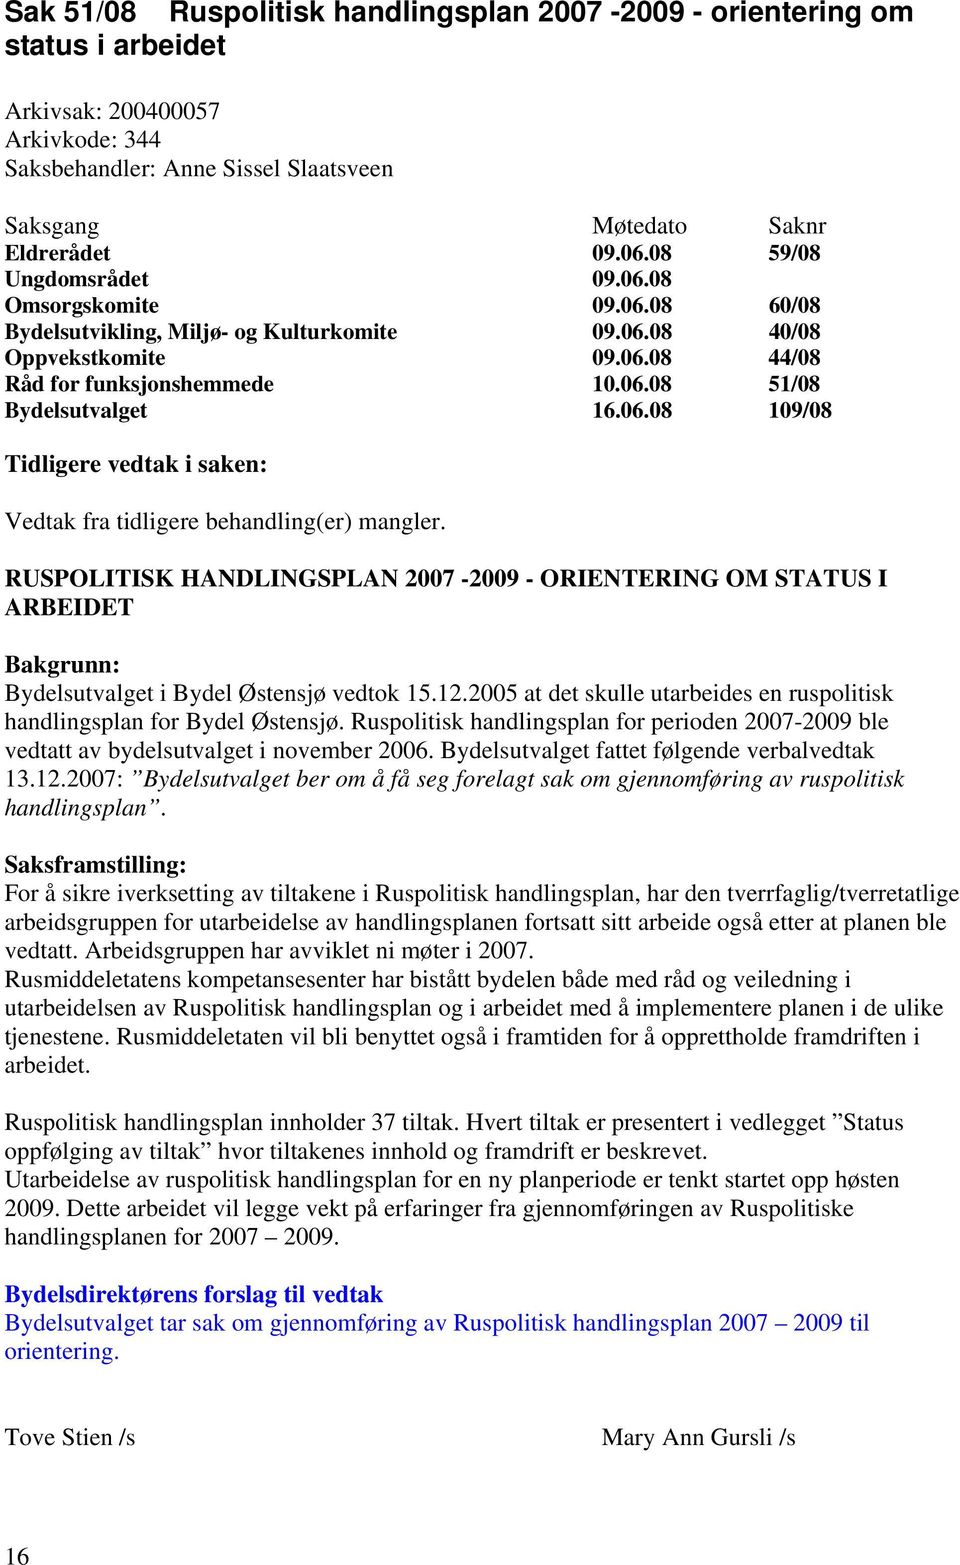 RUSPOLITISK HANDLINGSPLAN 2007-2009 - ORIENTERING OM STATUS I ARBEIDET Bakgrunn: Bydelsutvalget i Bydel Østensjø vedtok 15.12.